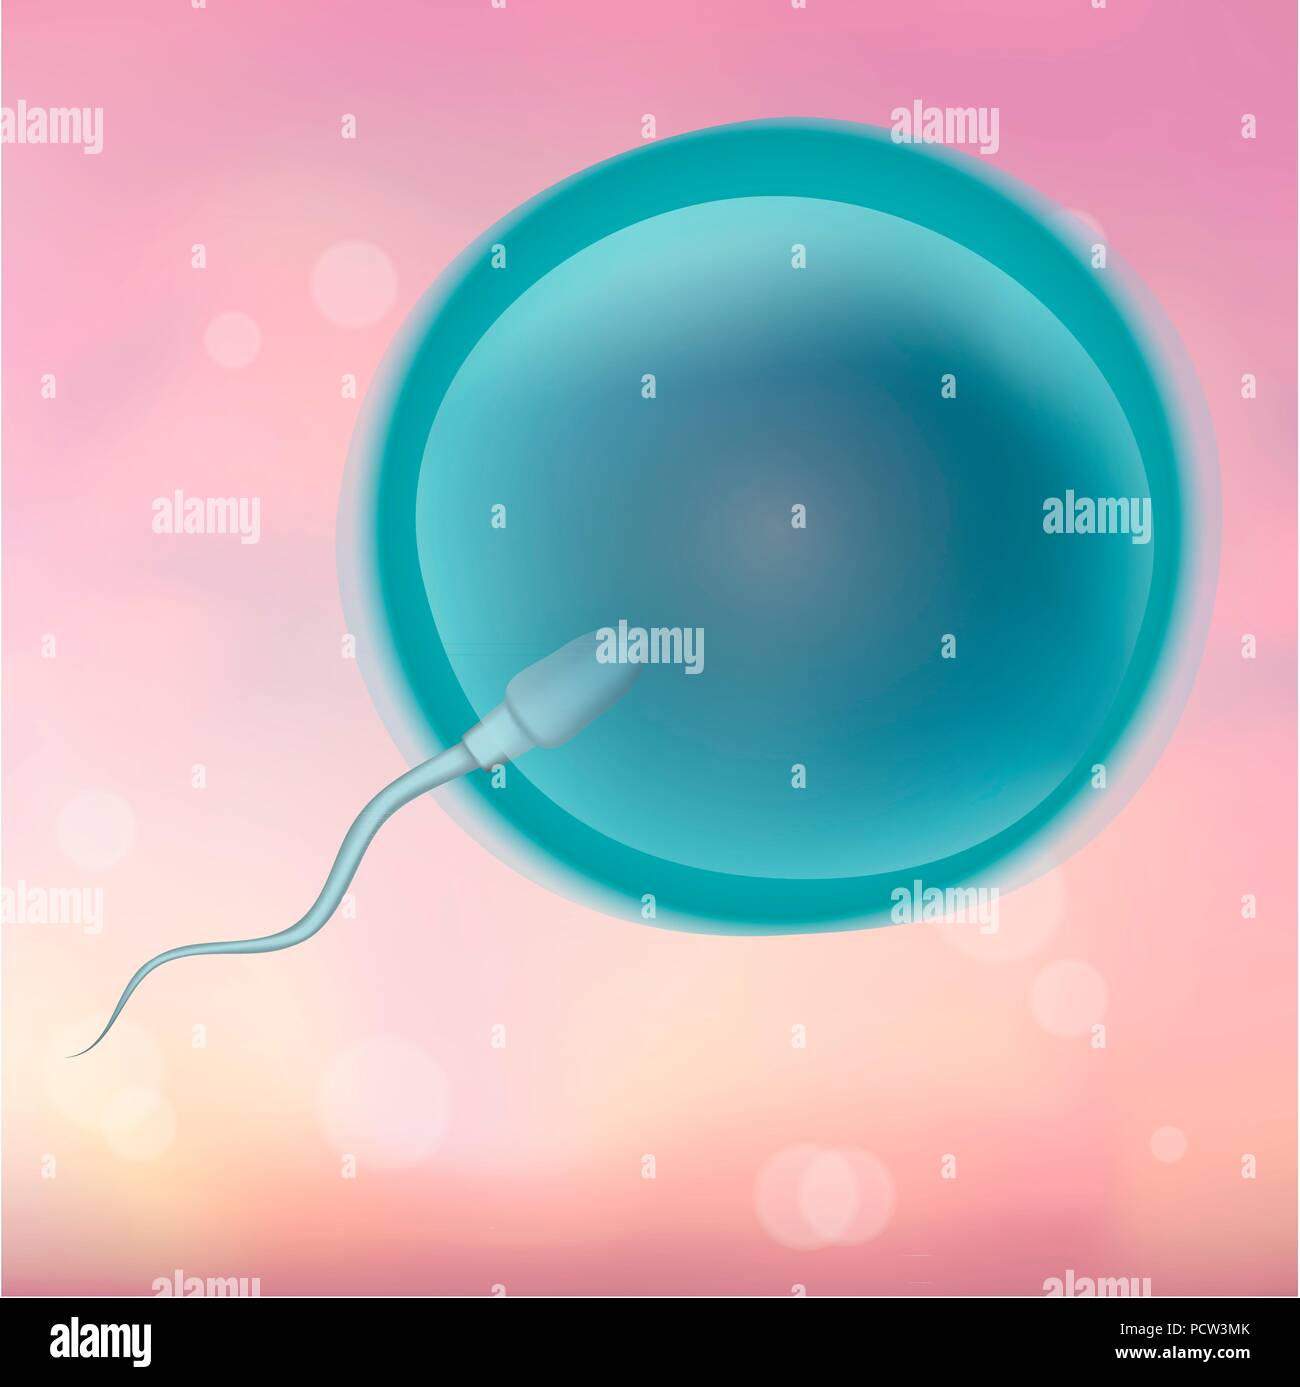 Sperm fertilizing an egg, illustration. Stock Photo